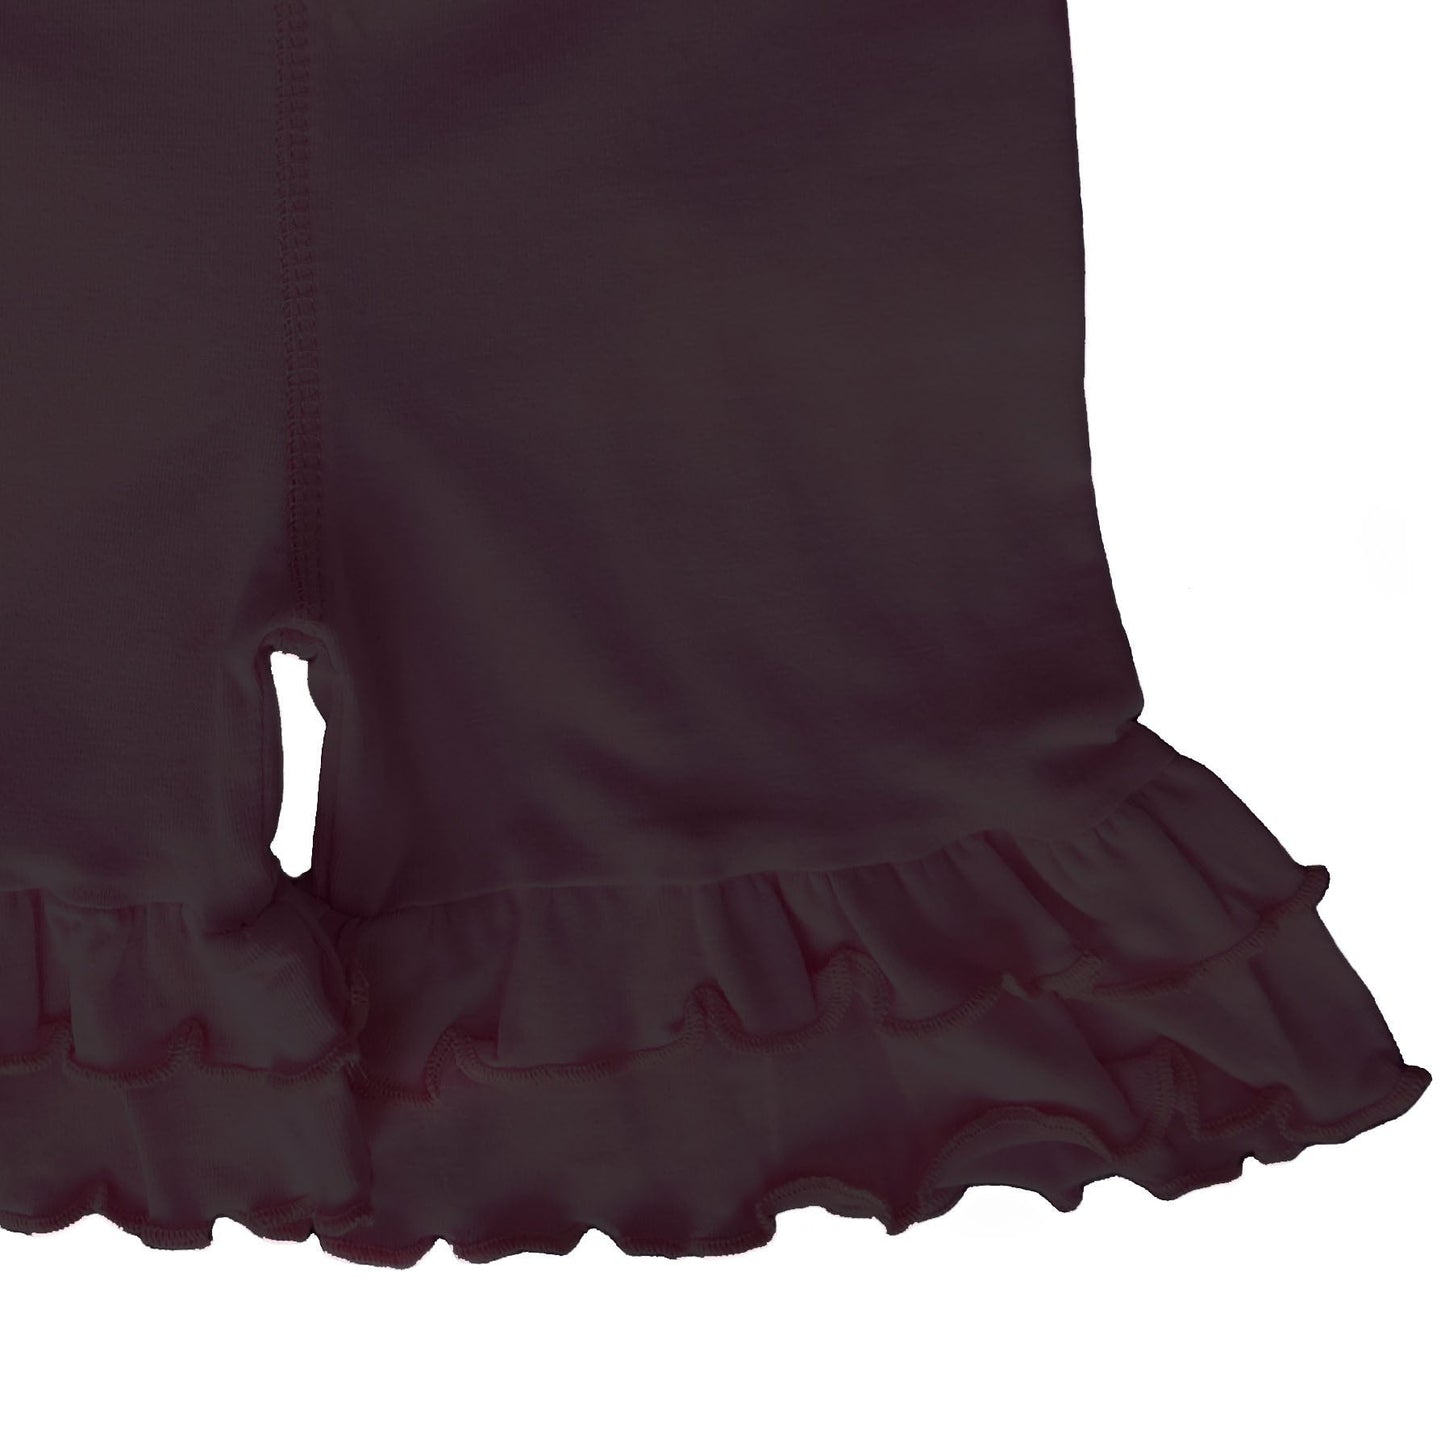 AnnLoren Little/Big Girls Black Stretch Cotton Knit Ruffled Shorts